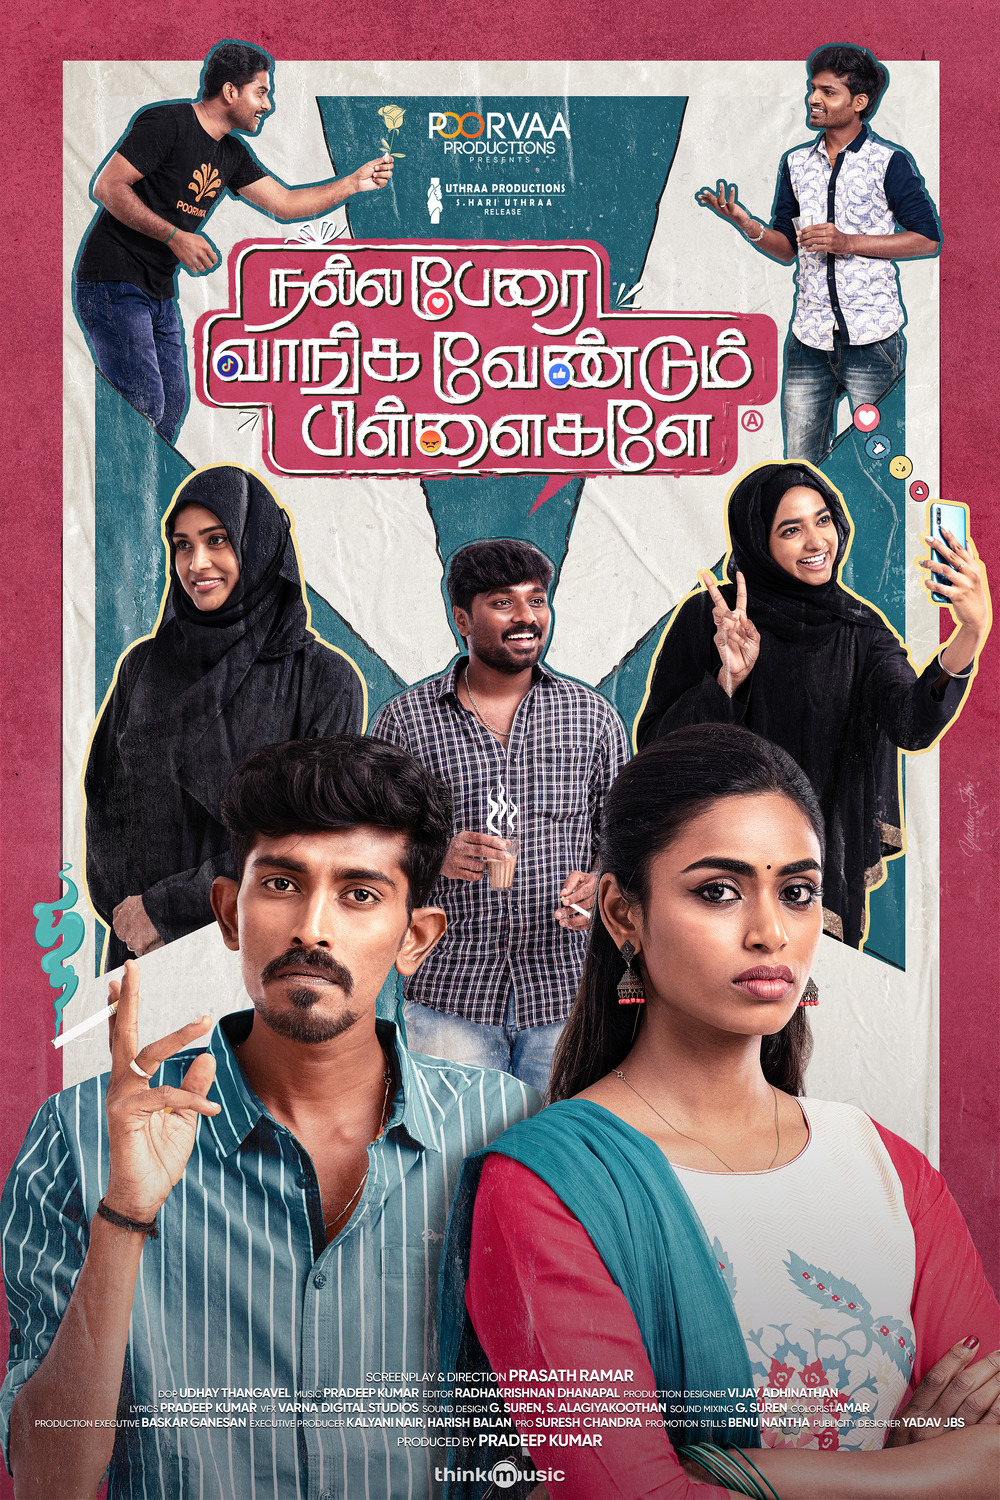 Extra Large Movie Poster Image for Nalla Perai Vaanga Vendum Pillaigale (#4 of 9)